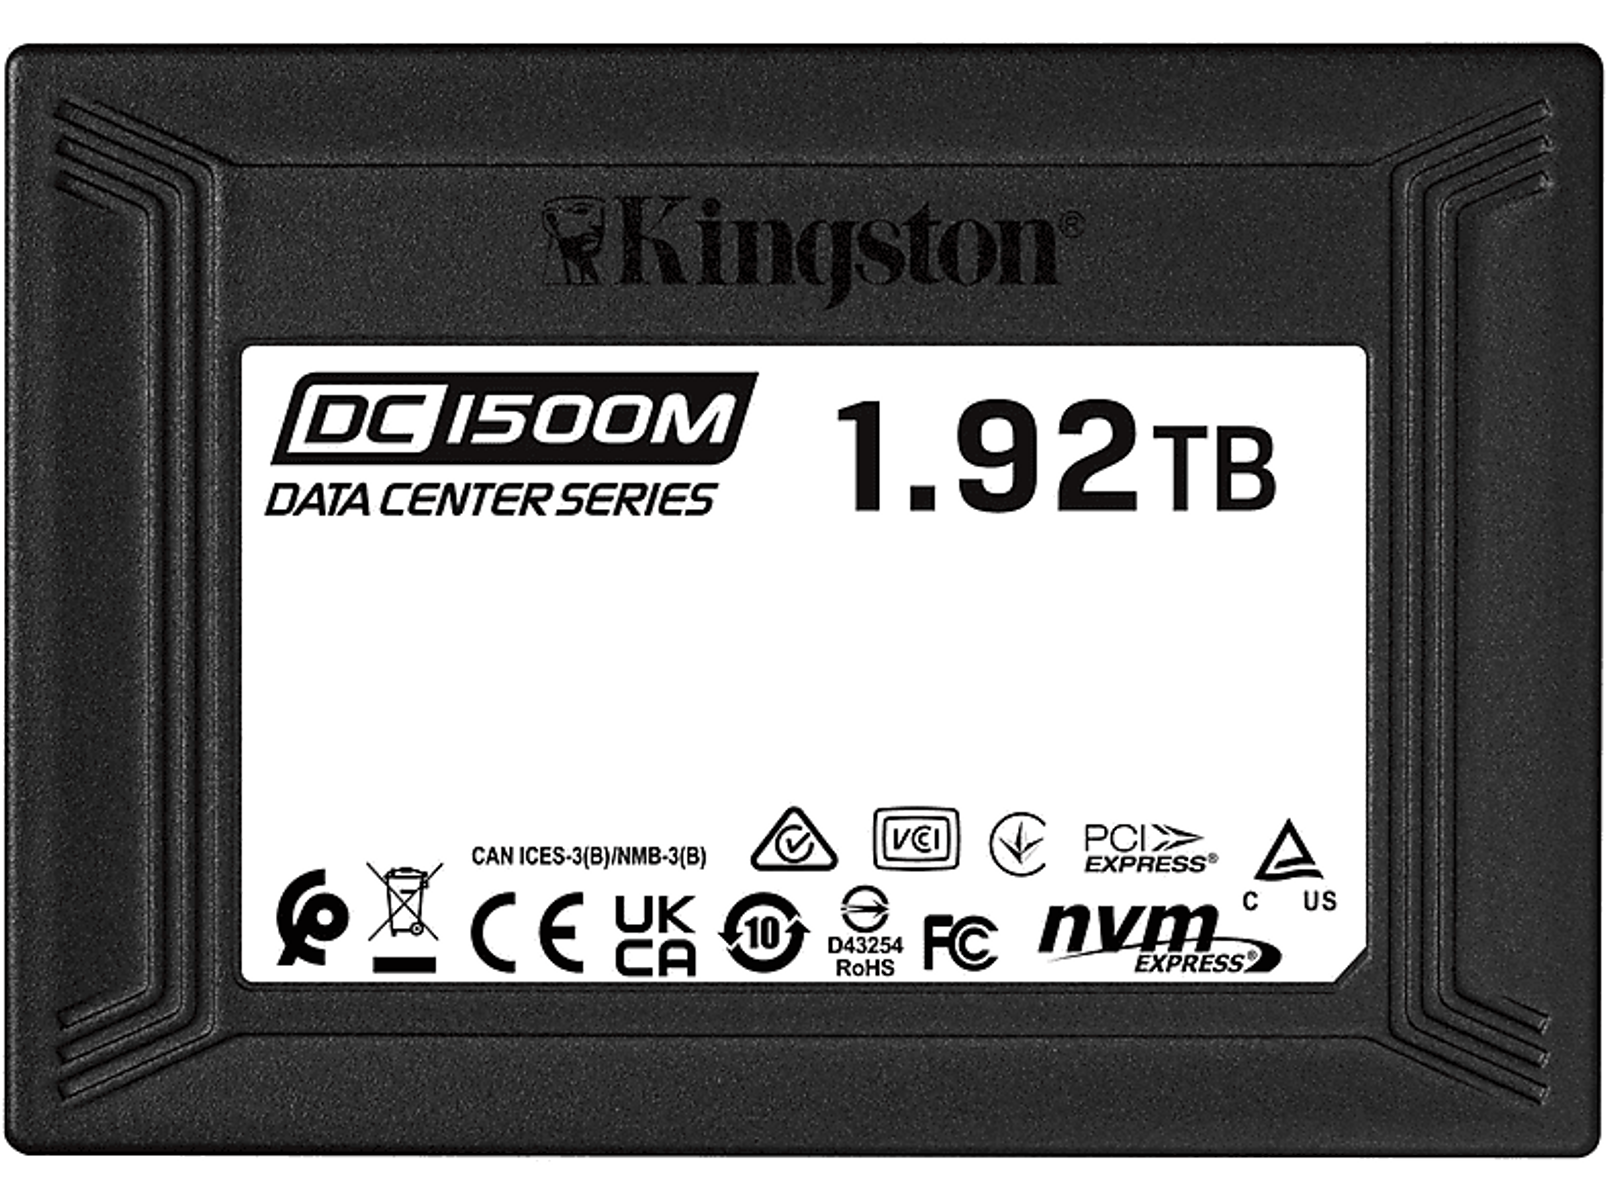 KINGSTON SEDC1500M/1920G, 12 GB, HDD, intern Zoll, 2,5 SSD